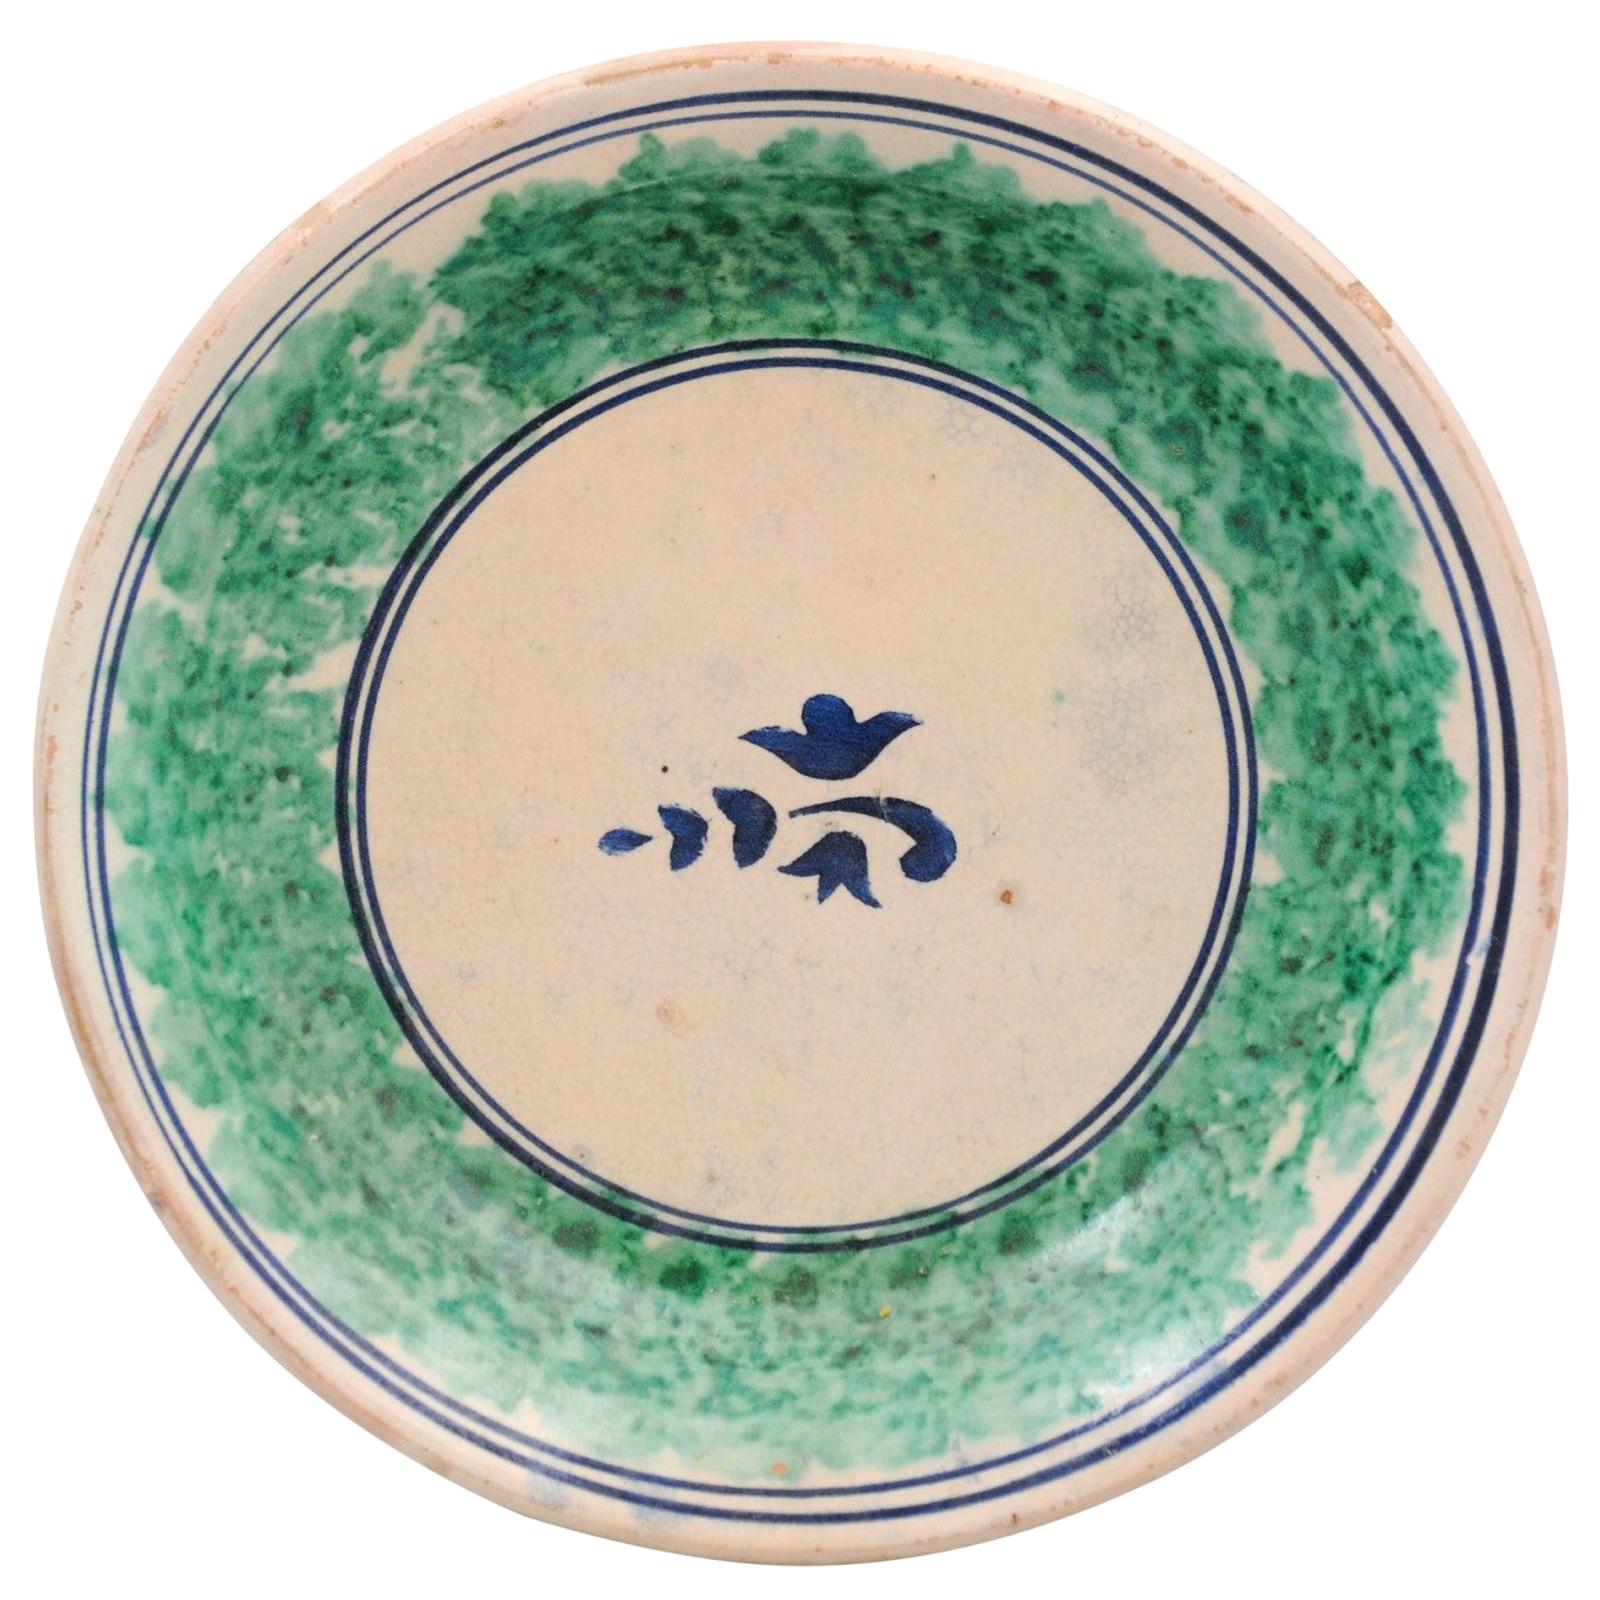 Italian 19th Century Pottery Platter with Navy Blue Stylized Foliage Motif